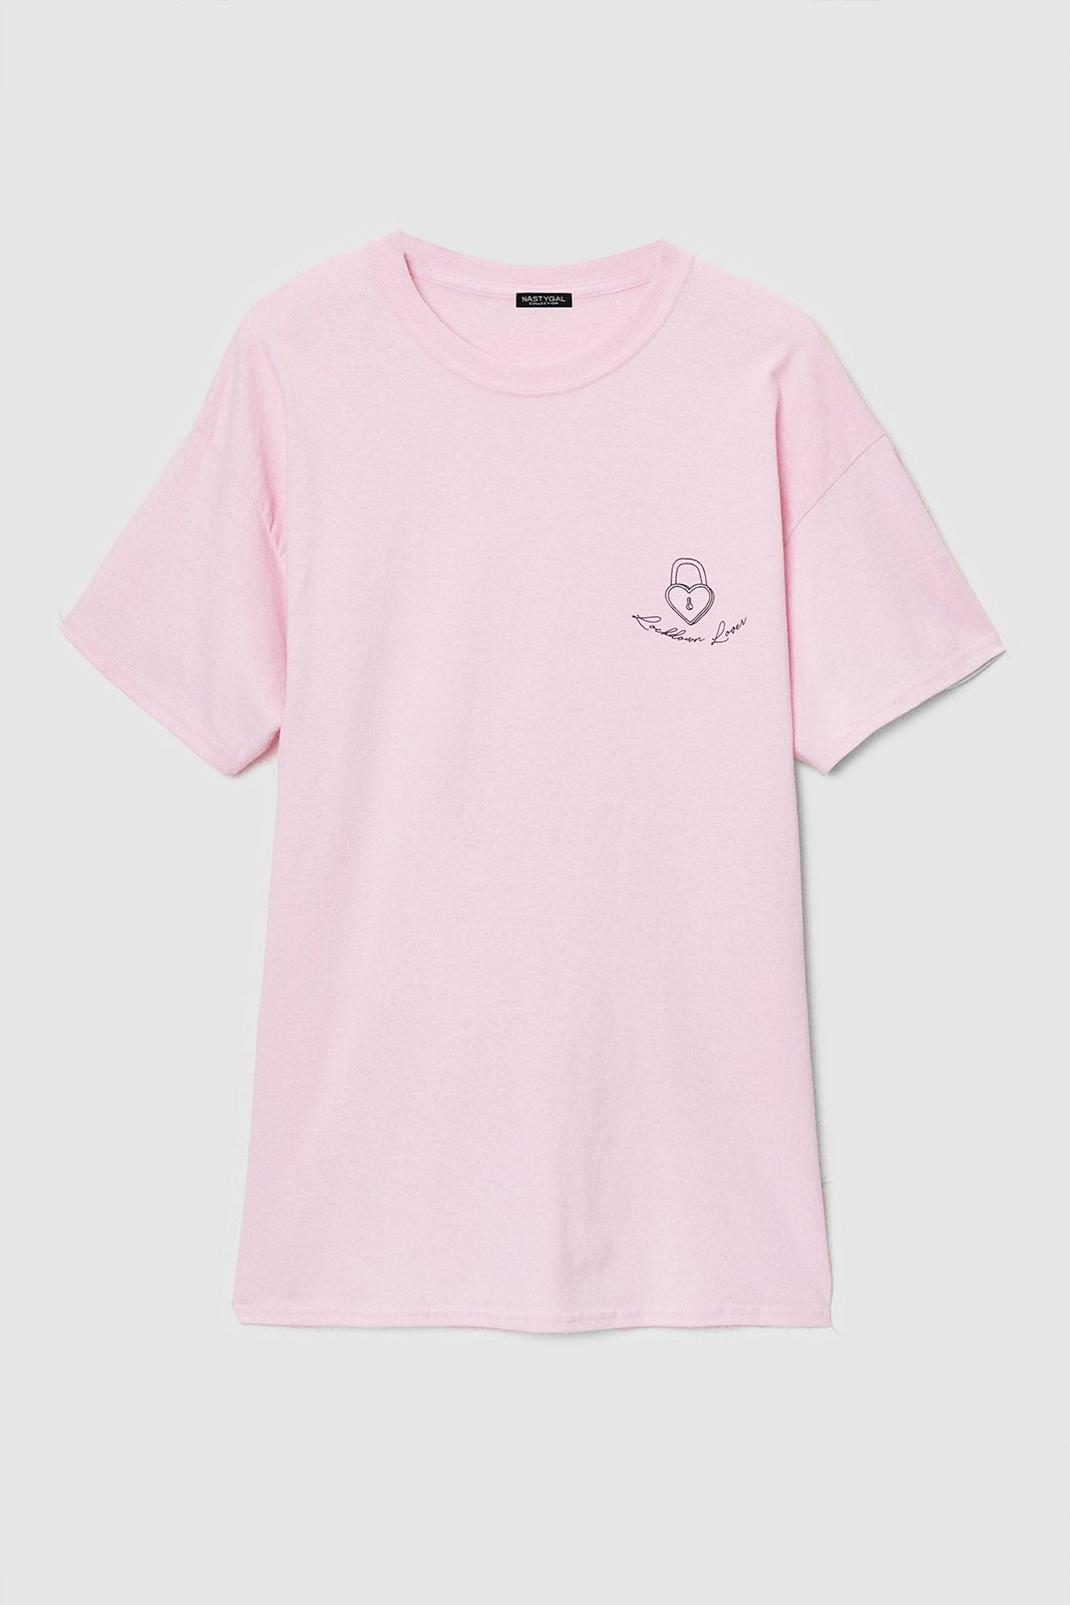 Grande Taille - T-shirt ample à impression cadenas Lockdown Love, Baby pink image number 1